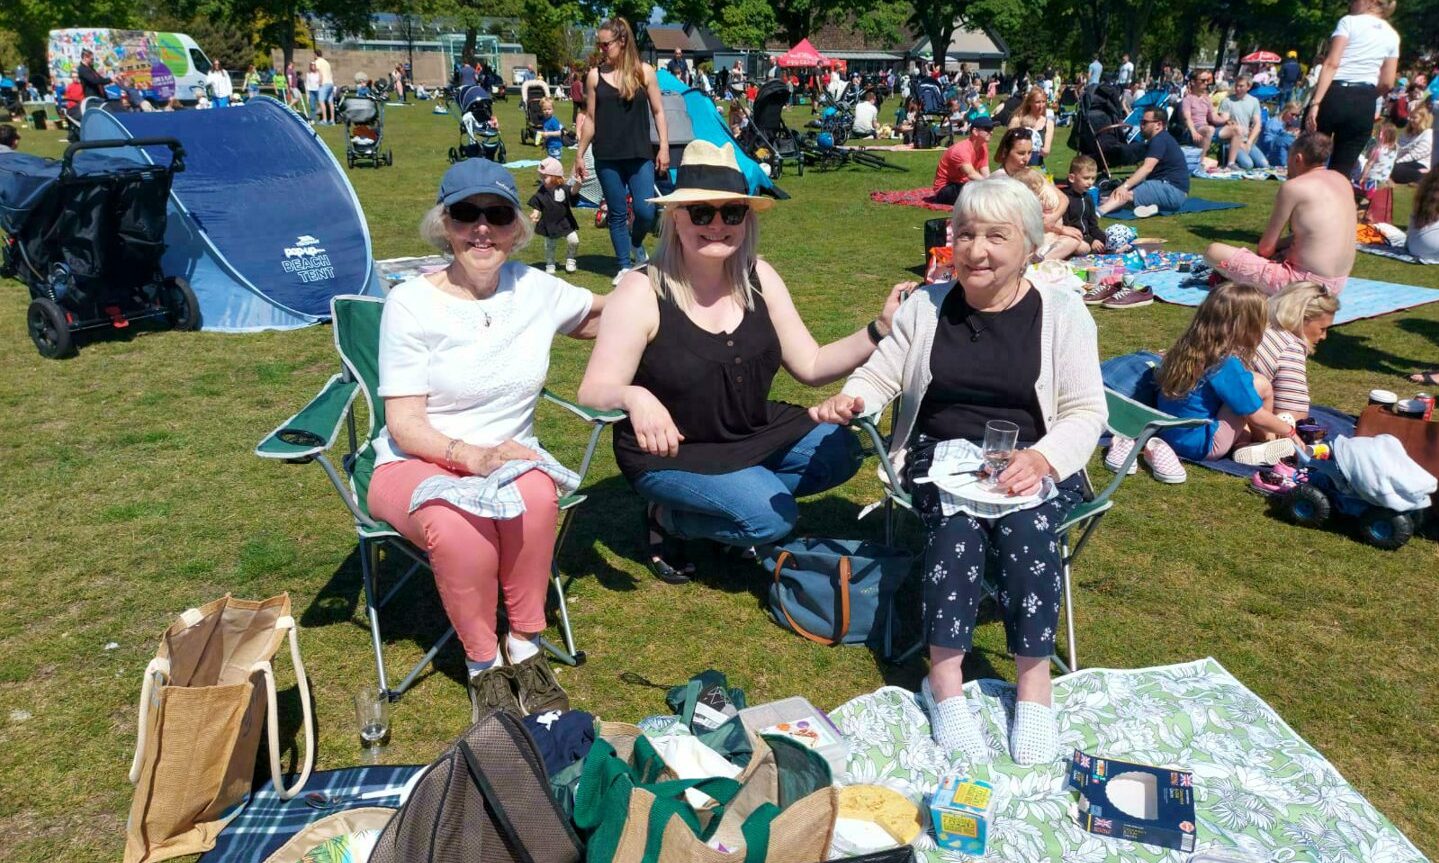 Liz Penny, Ruth McKenzie and Liz McKenzie soak up the sun in Duthie Park.